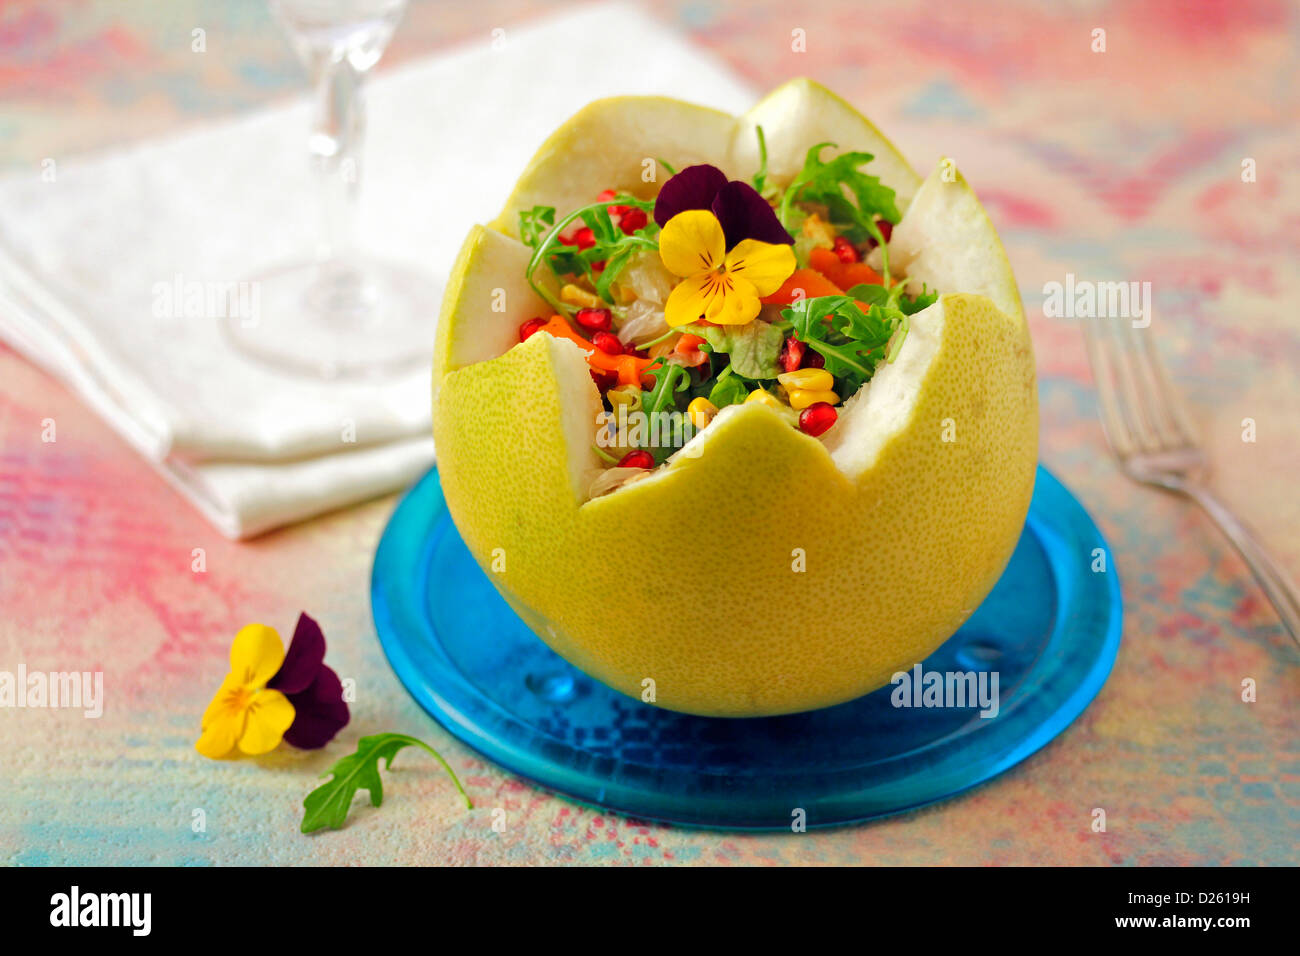 Stuffed grapefruit with salad. Stock Photo